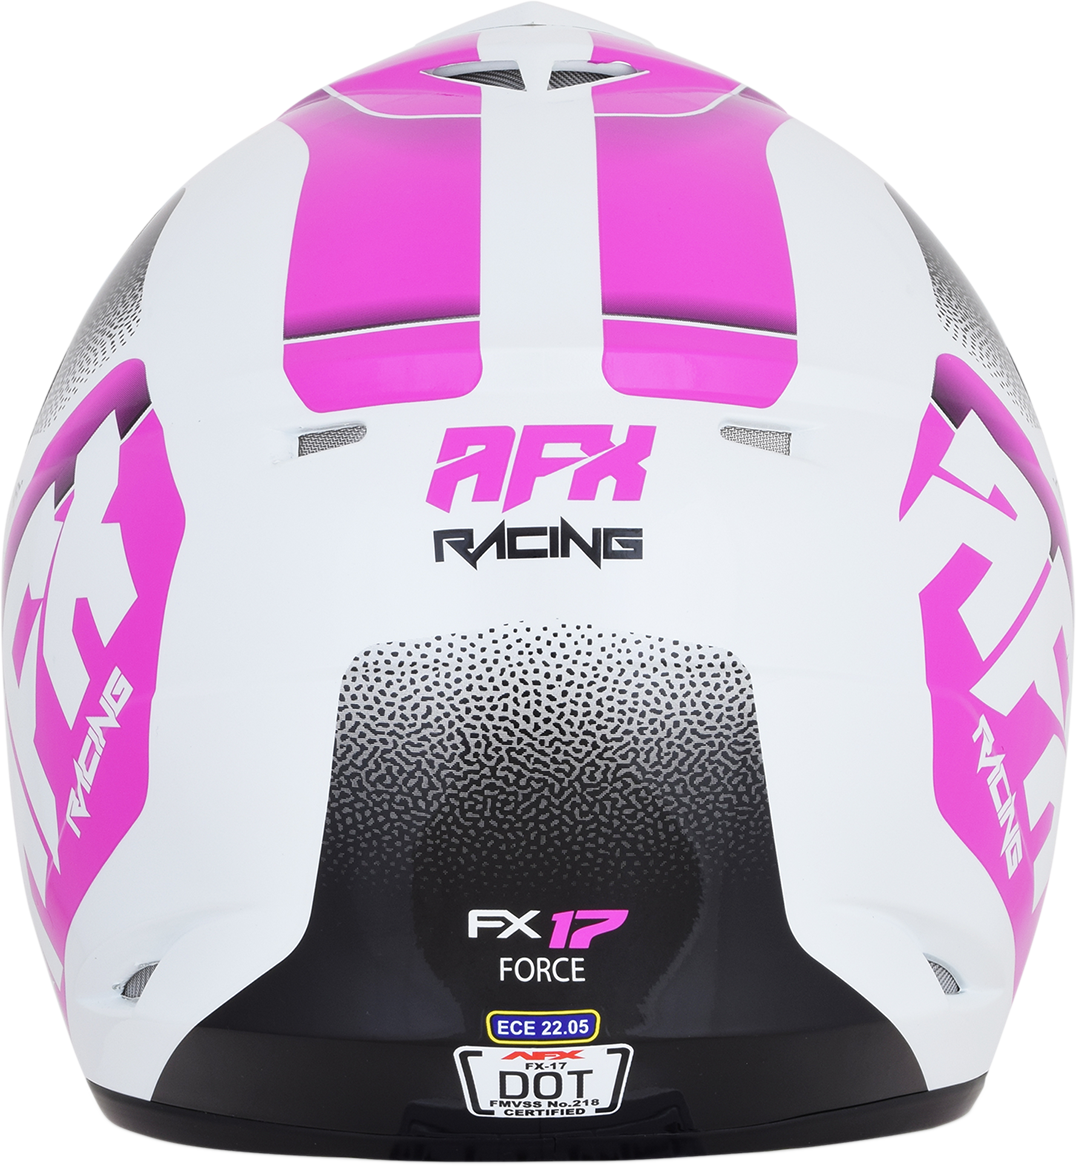 AFX FX-17 Helmet - Force - Pearl White/Fuchsia - Large 0110-5258